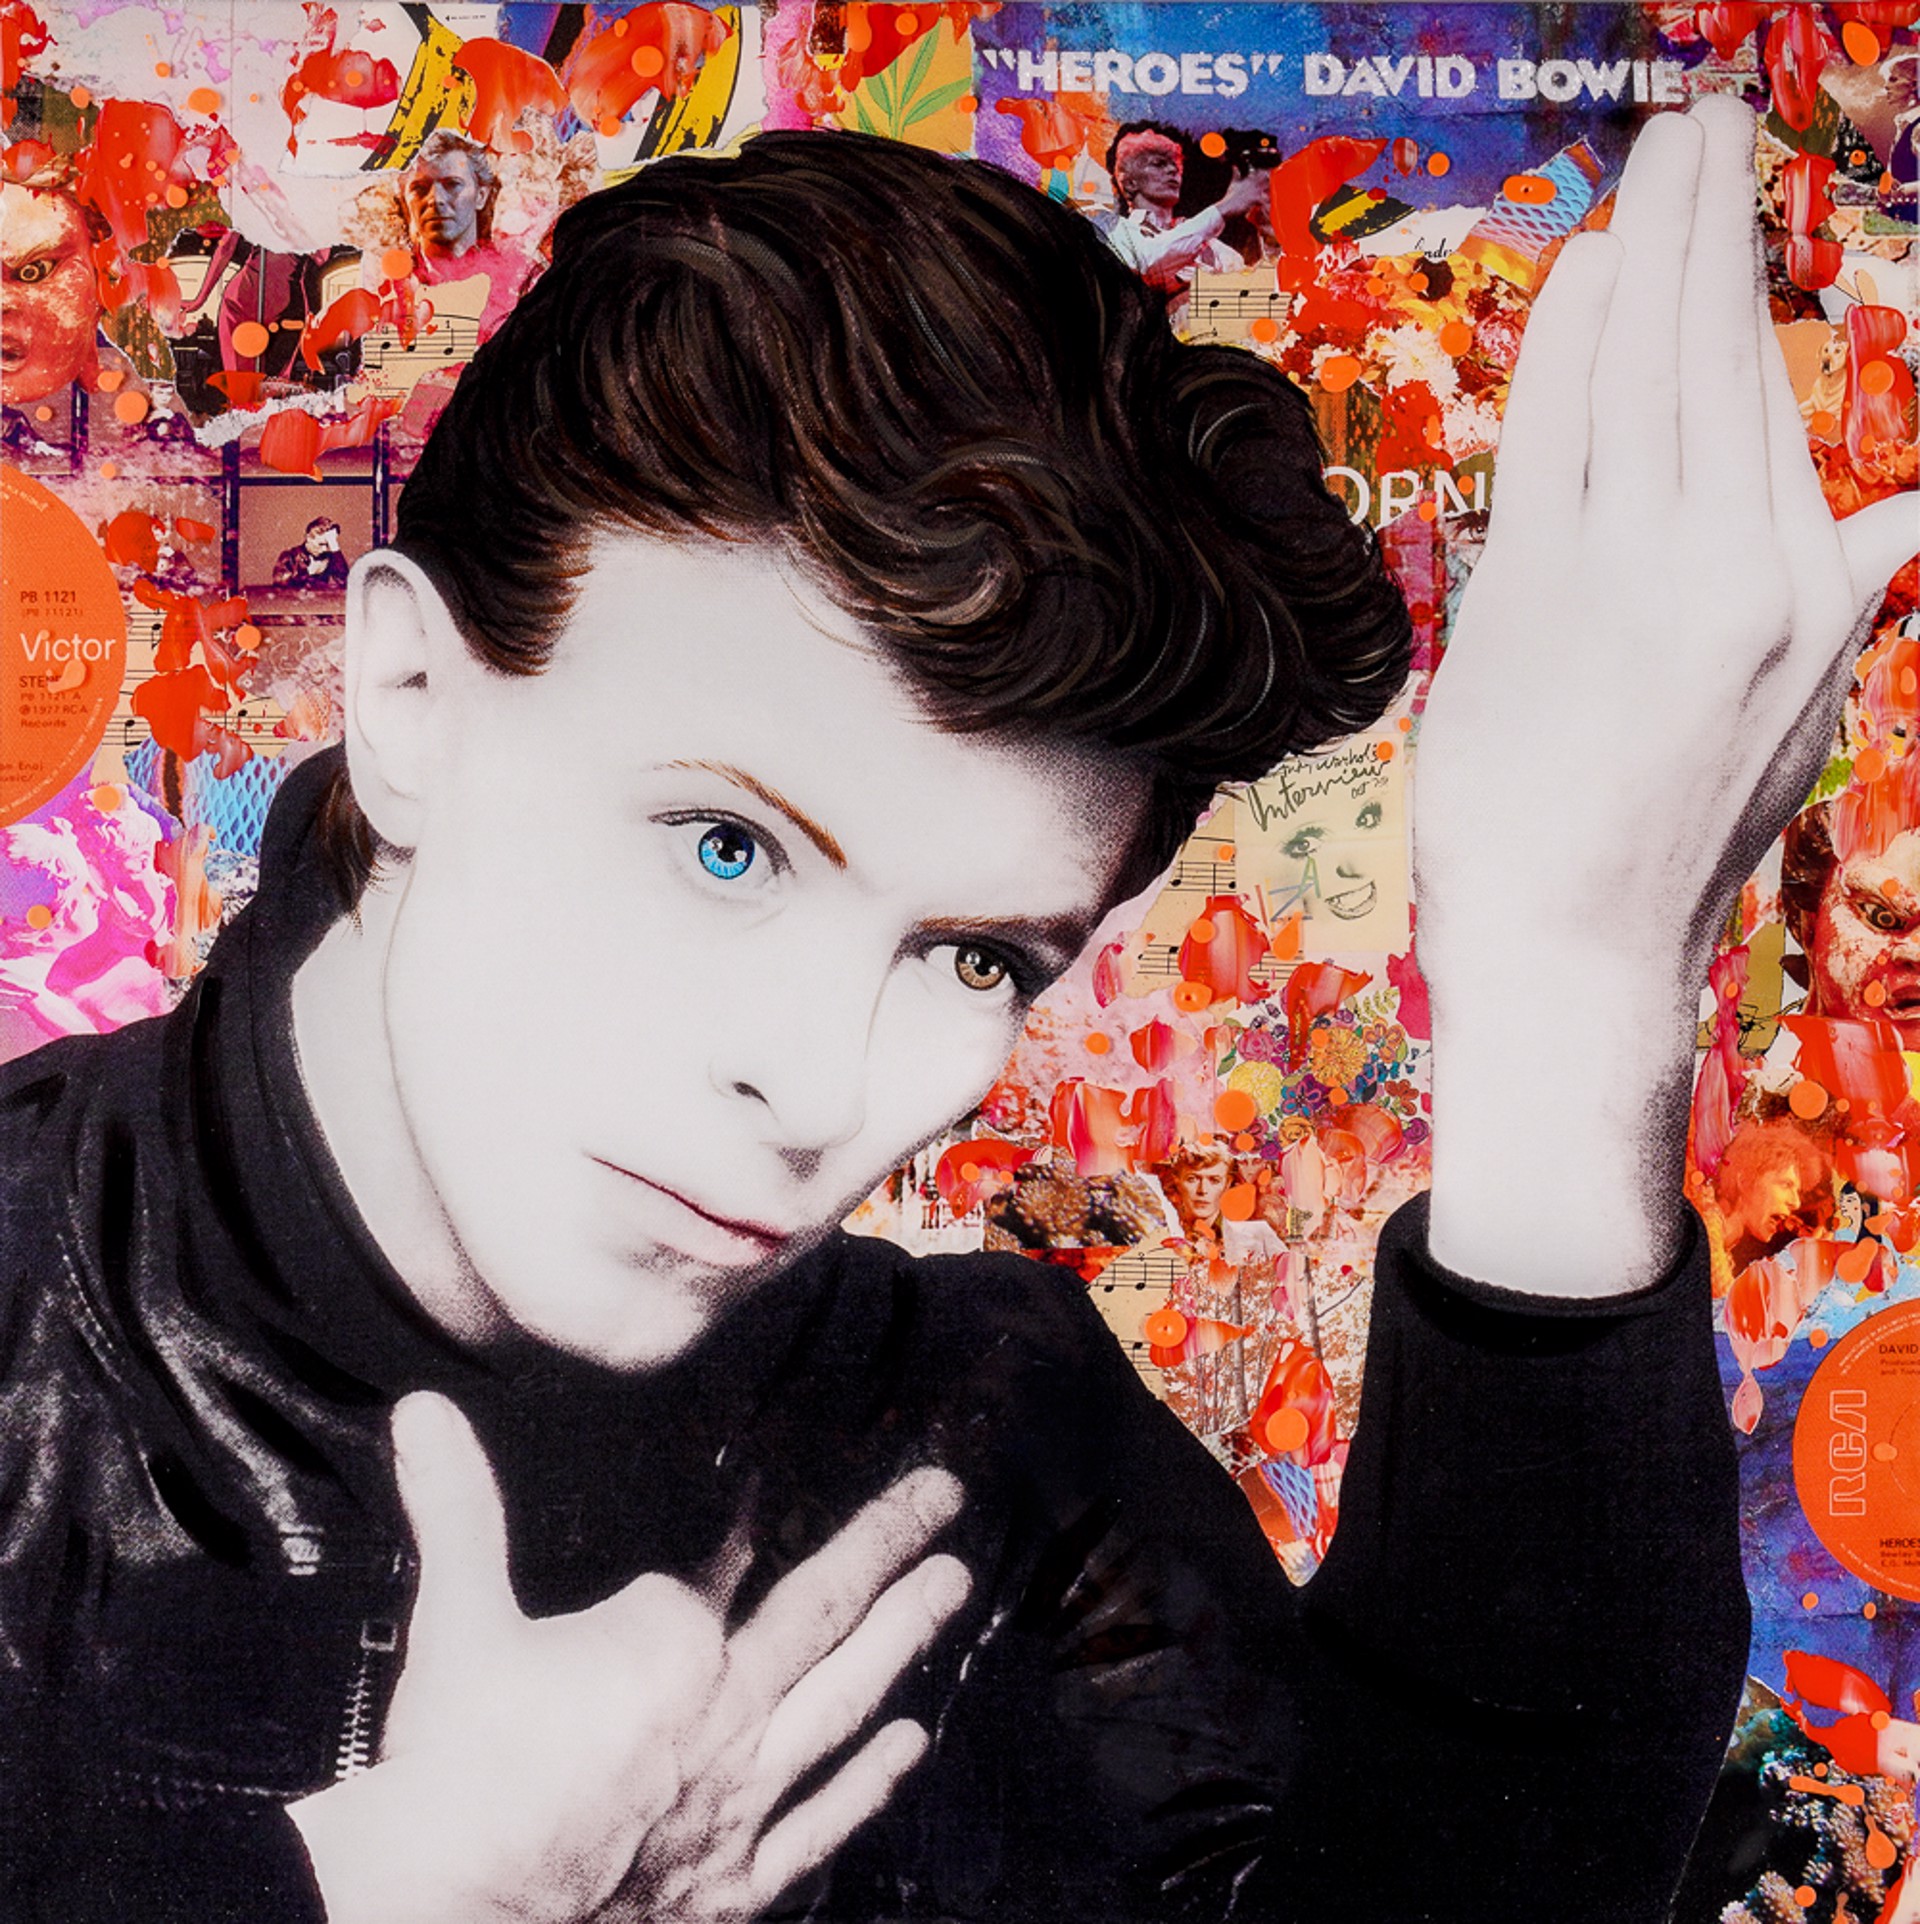 David Bowie "Heroes" by De Von